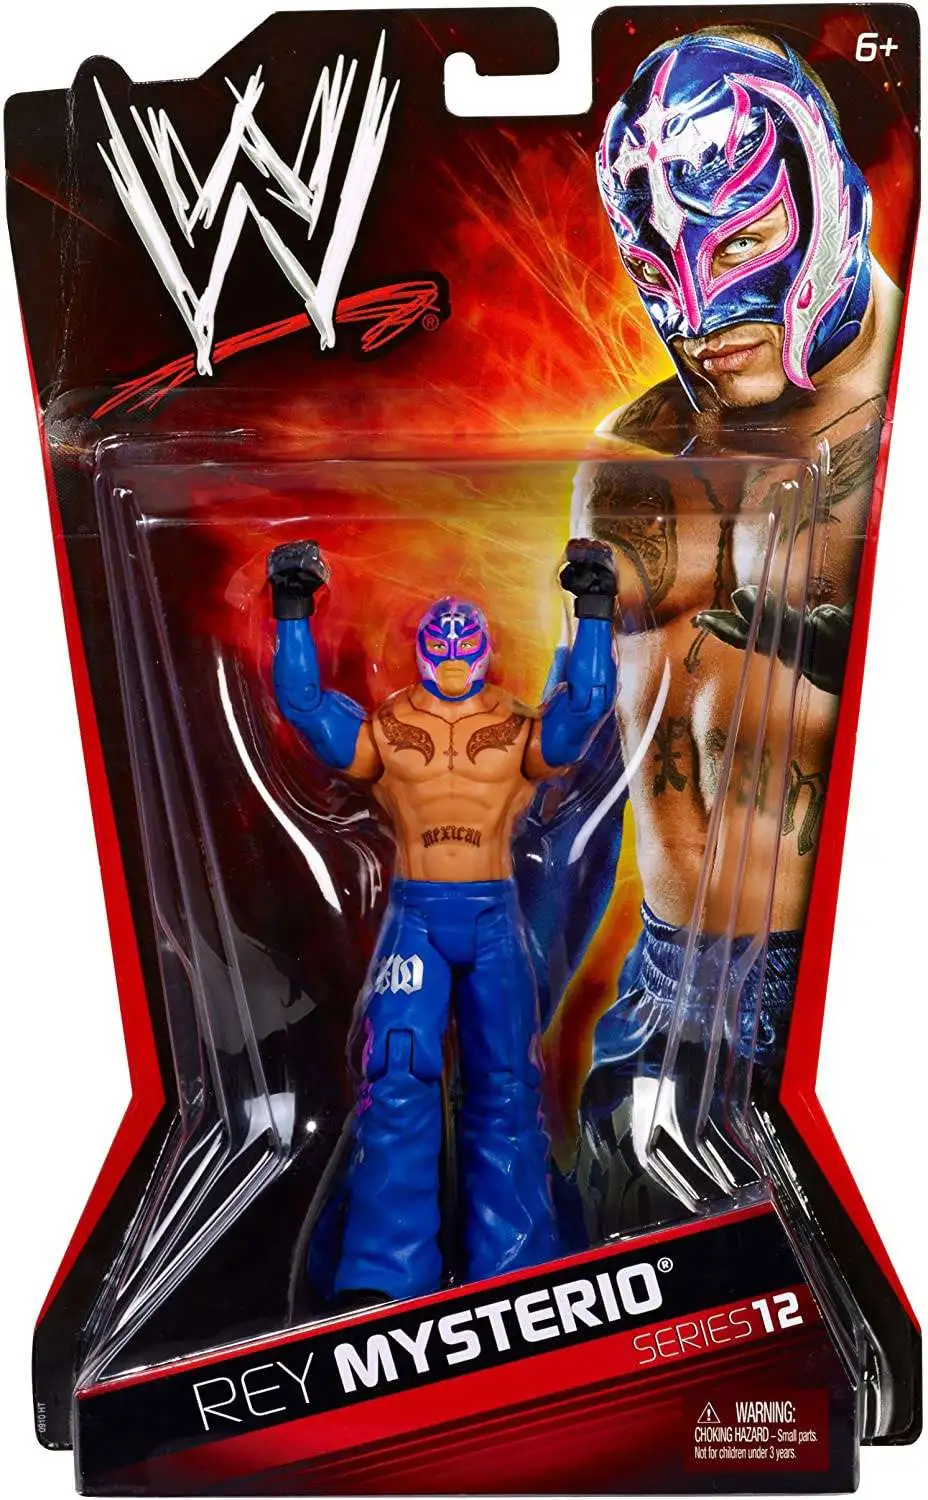 2 Rey Mysterio Mask Hood Mattel Accessories for WWE Wrestling Figures 